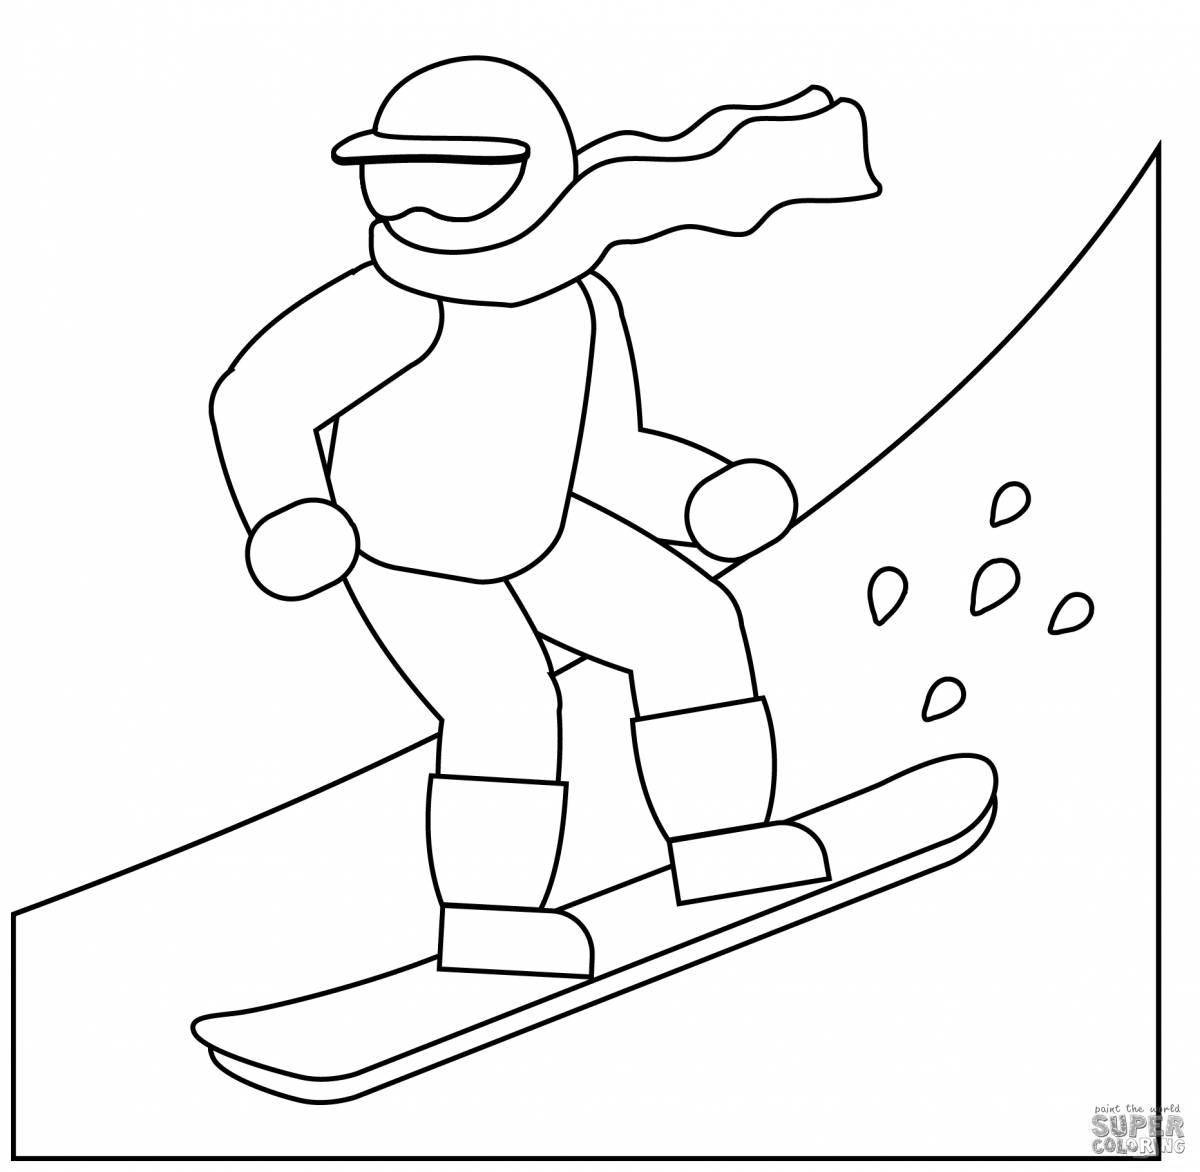 Children's snowboarder coloring book